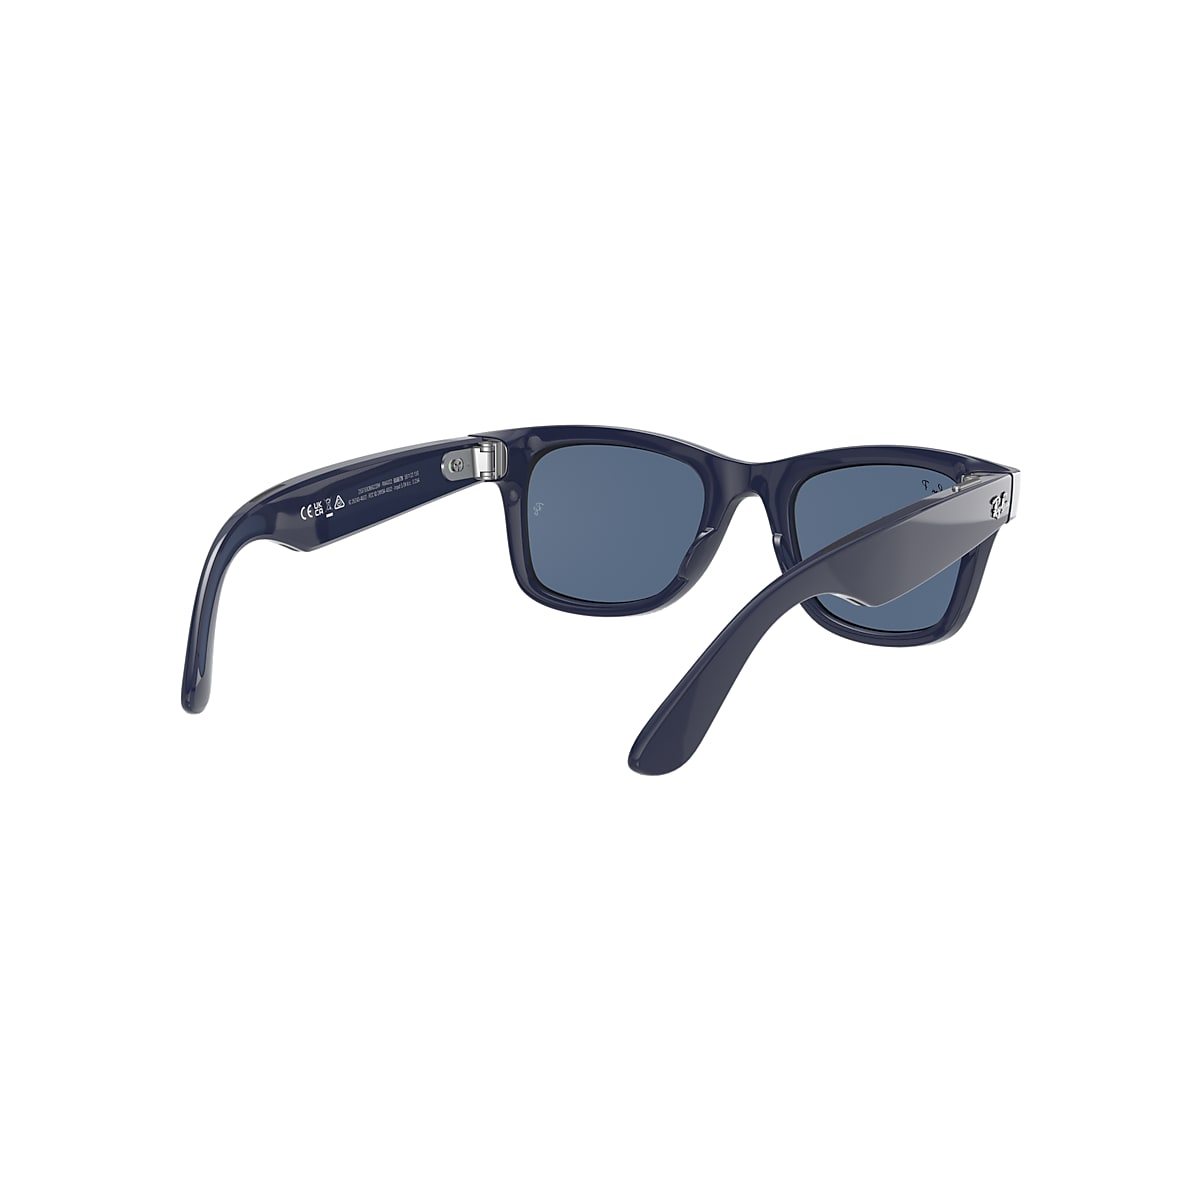 Ray-ban Stories | Wayfarer Sunglasses in Blue and Dark Blue | Ray-Ban®